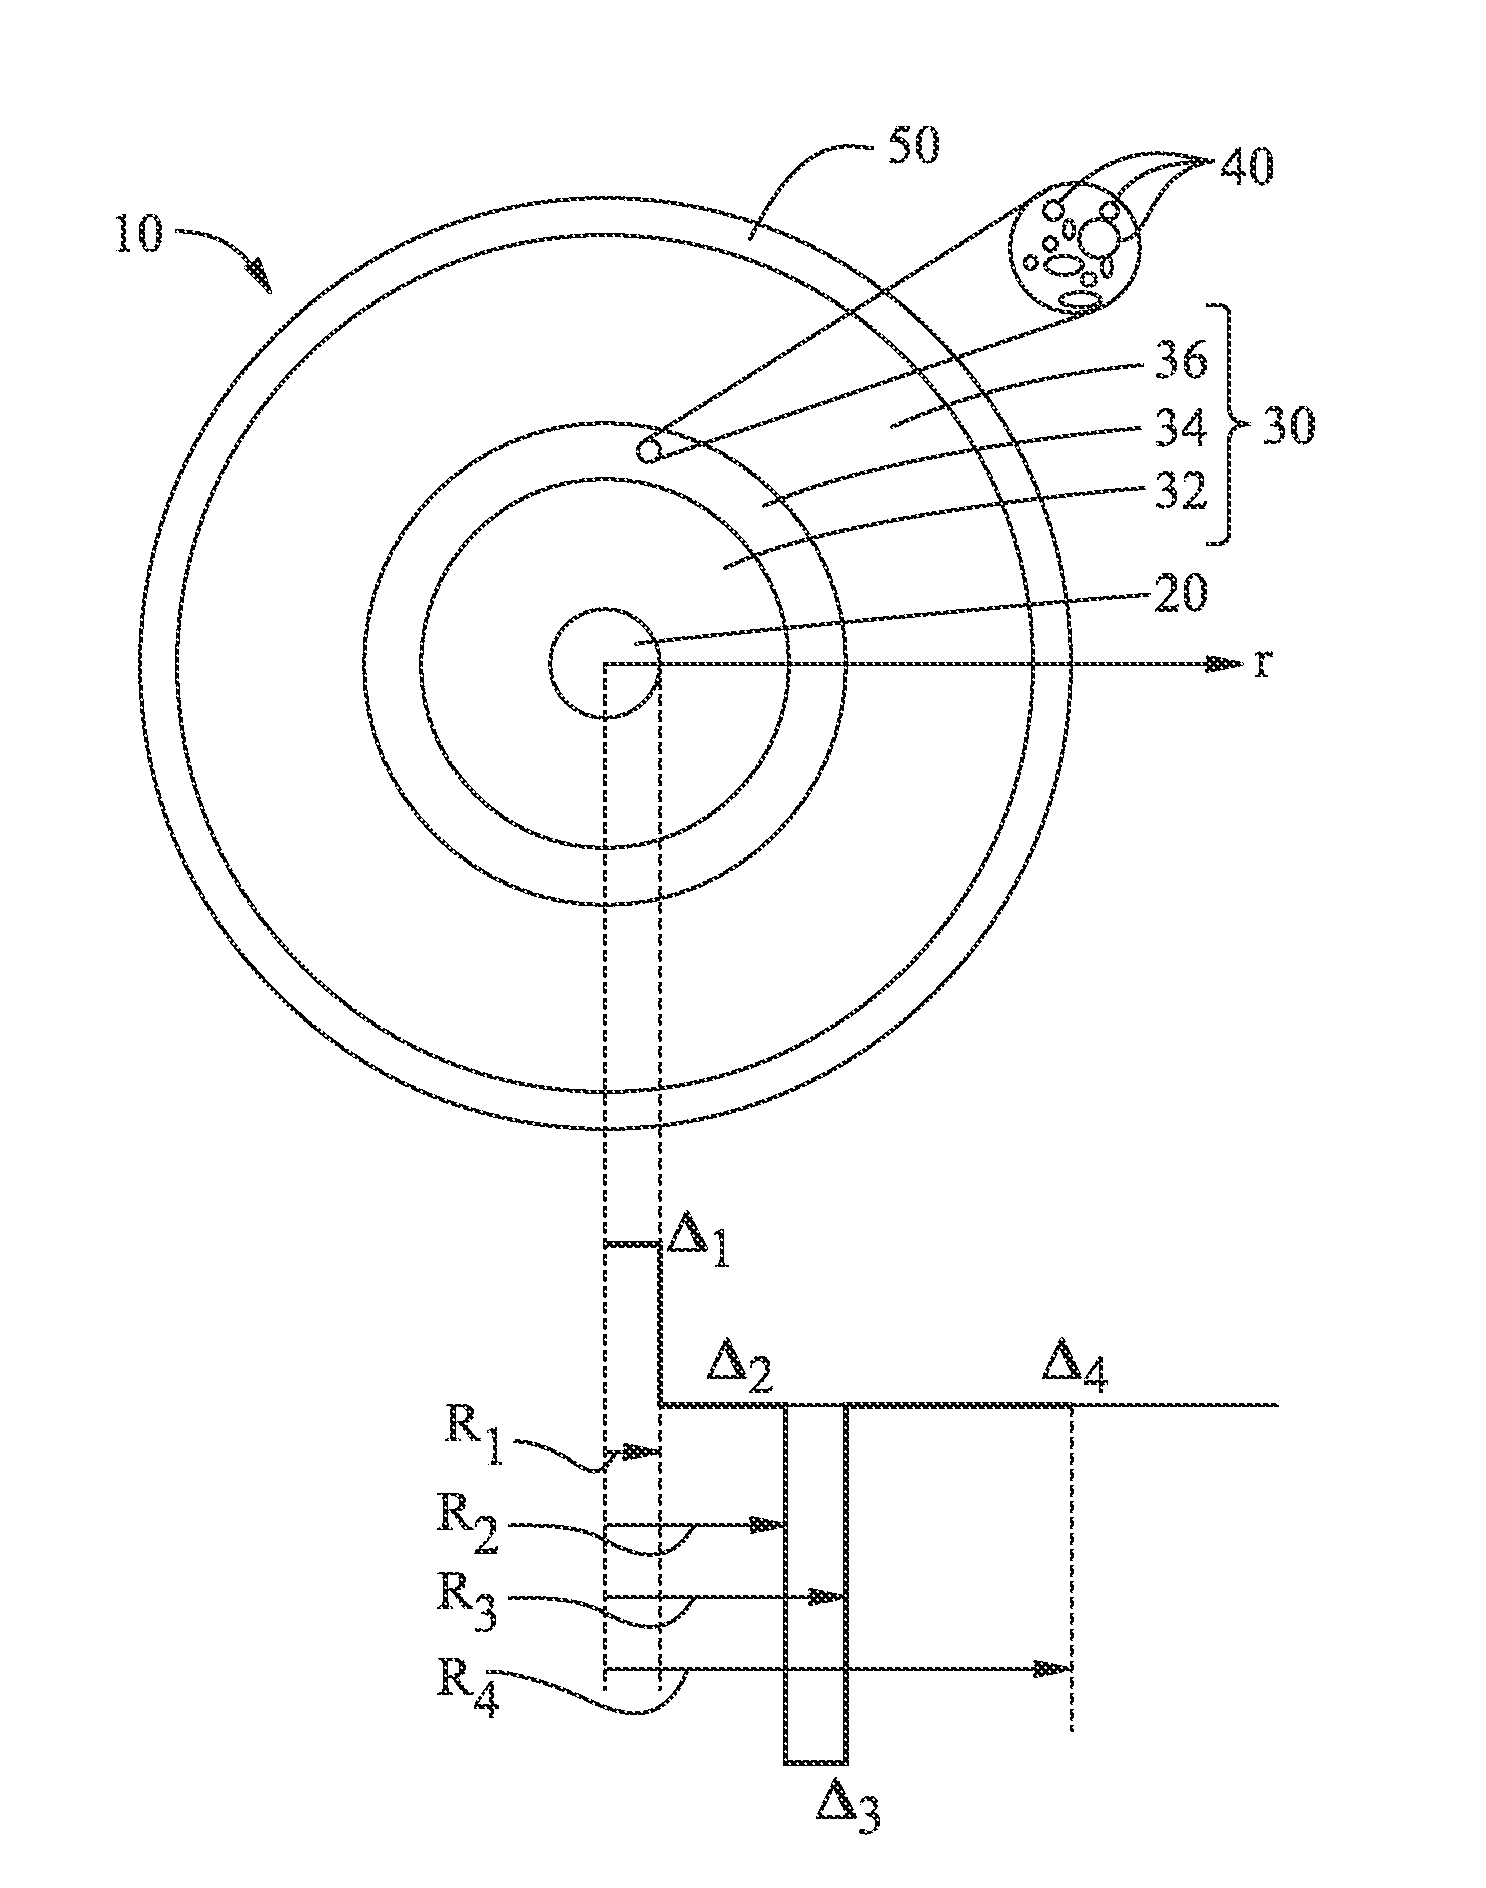 Methods for centering optical fibers inside a connector ferrule and optical fiber connector